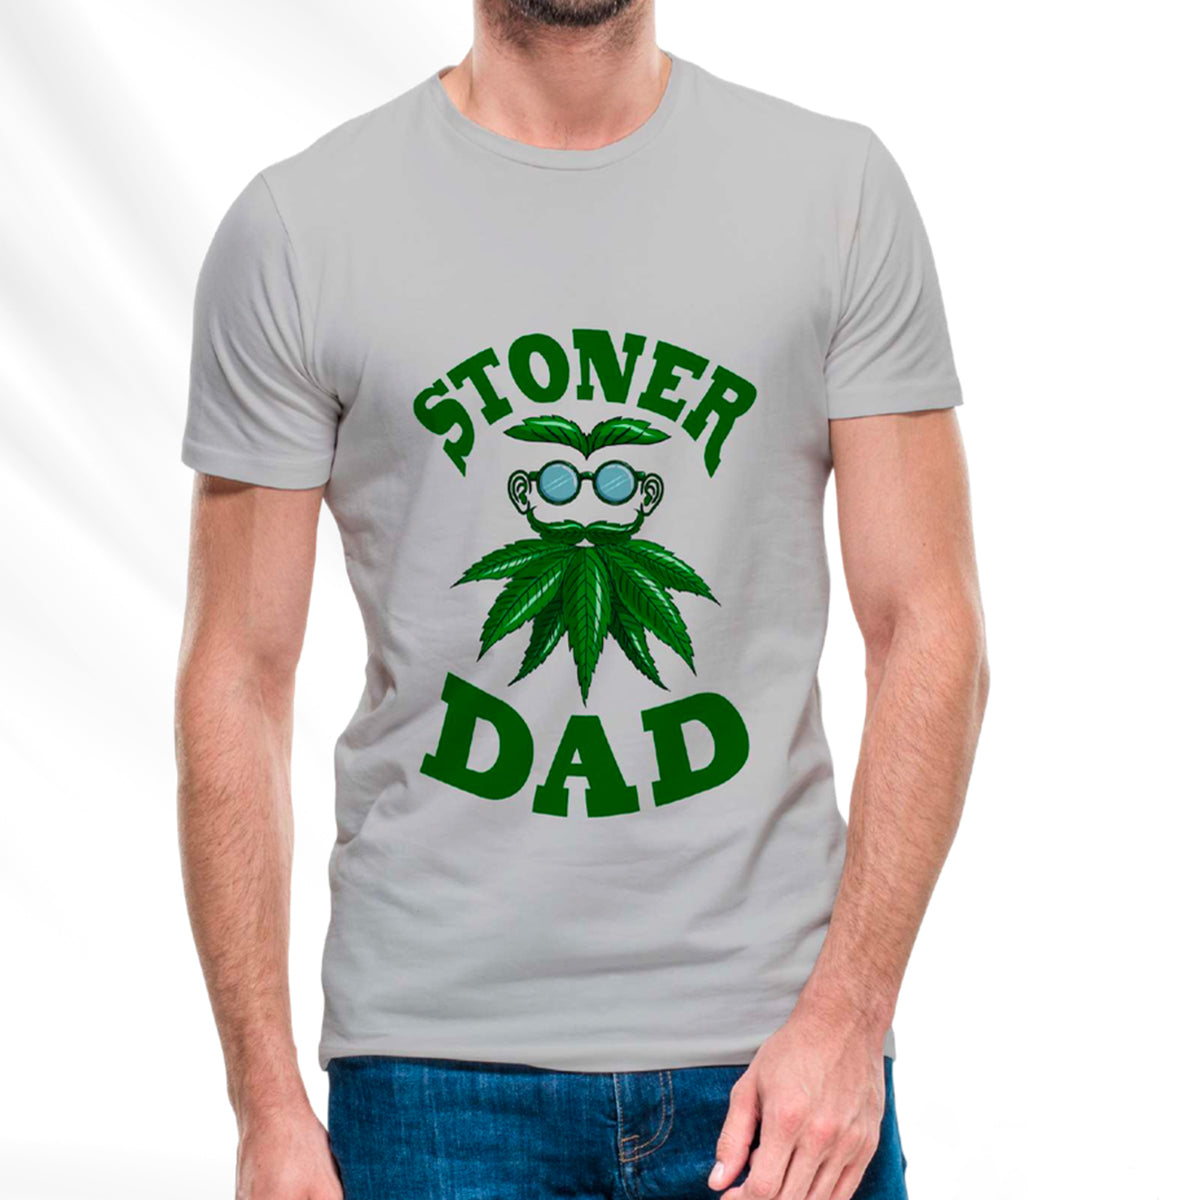 Stoner Dad T-Shirt Pack of  5 Units 1-M, 1-L, 1-XL, 1-XXL, 1-XXXL -- 60% Cotton 40% Polyester